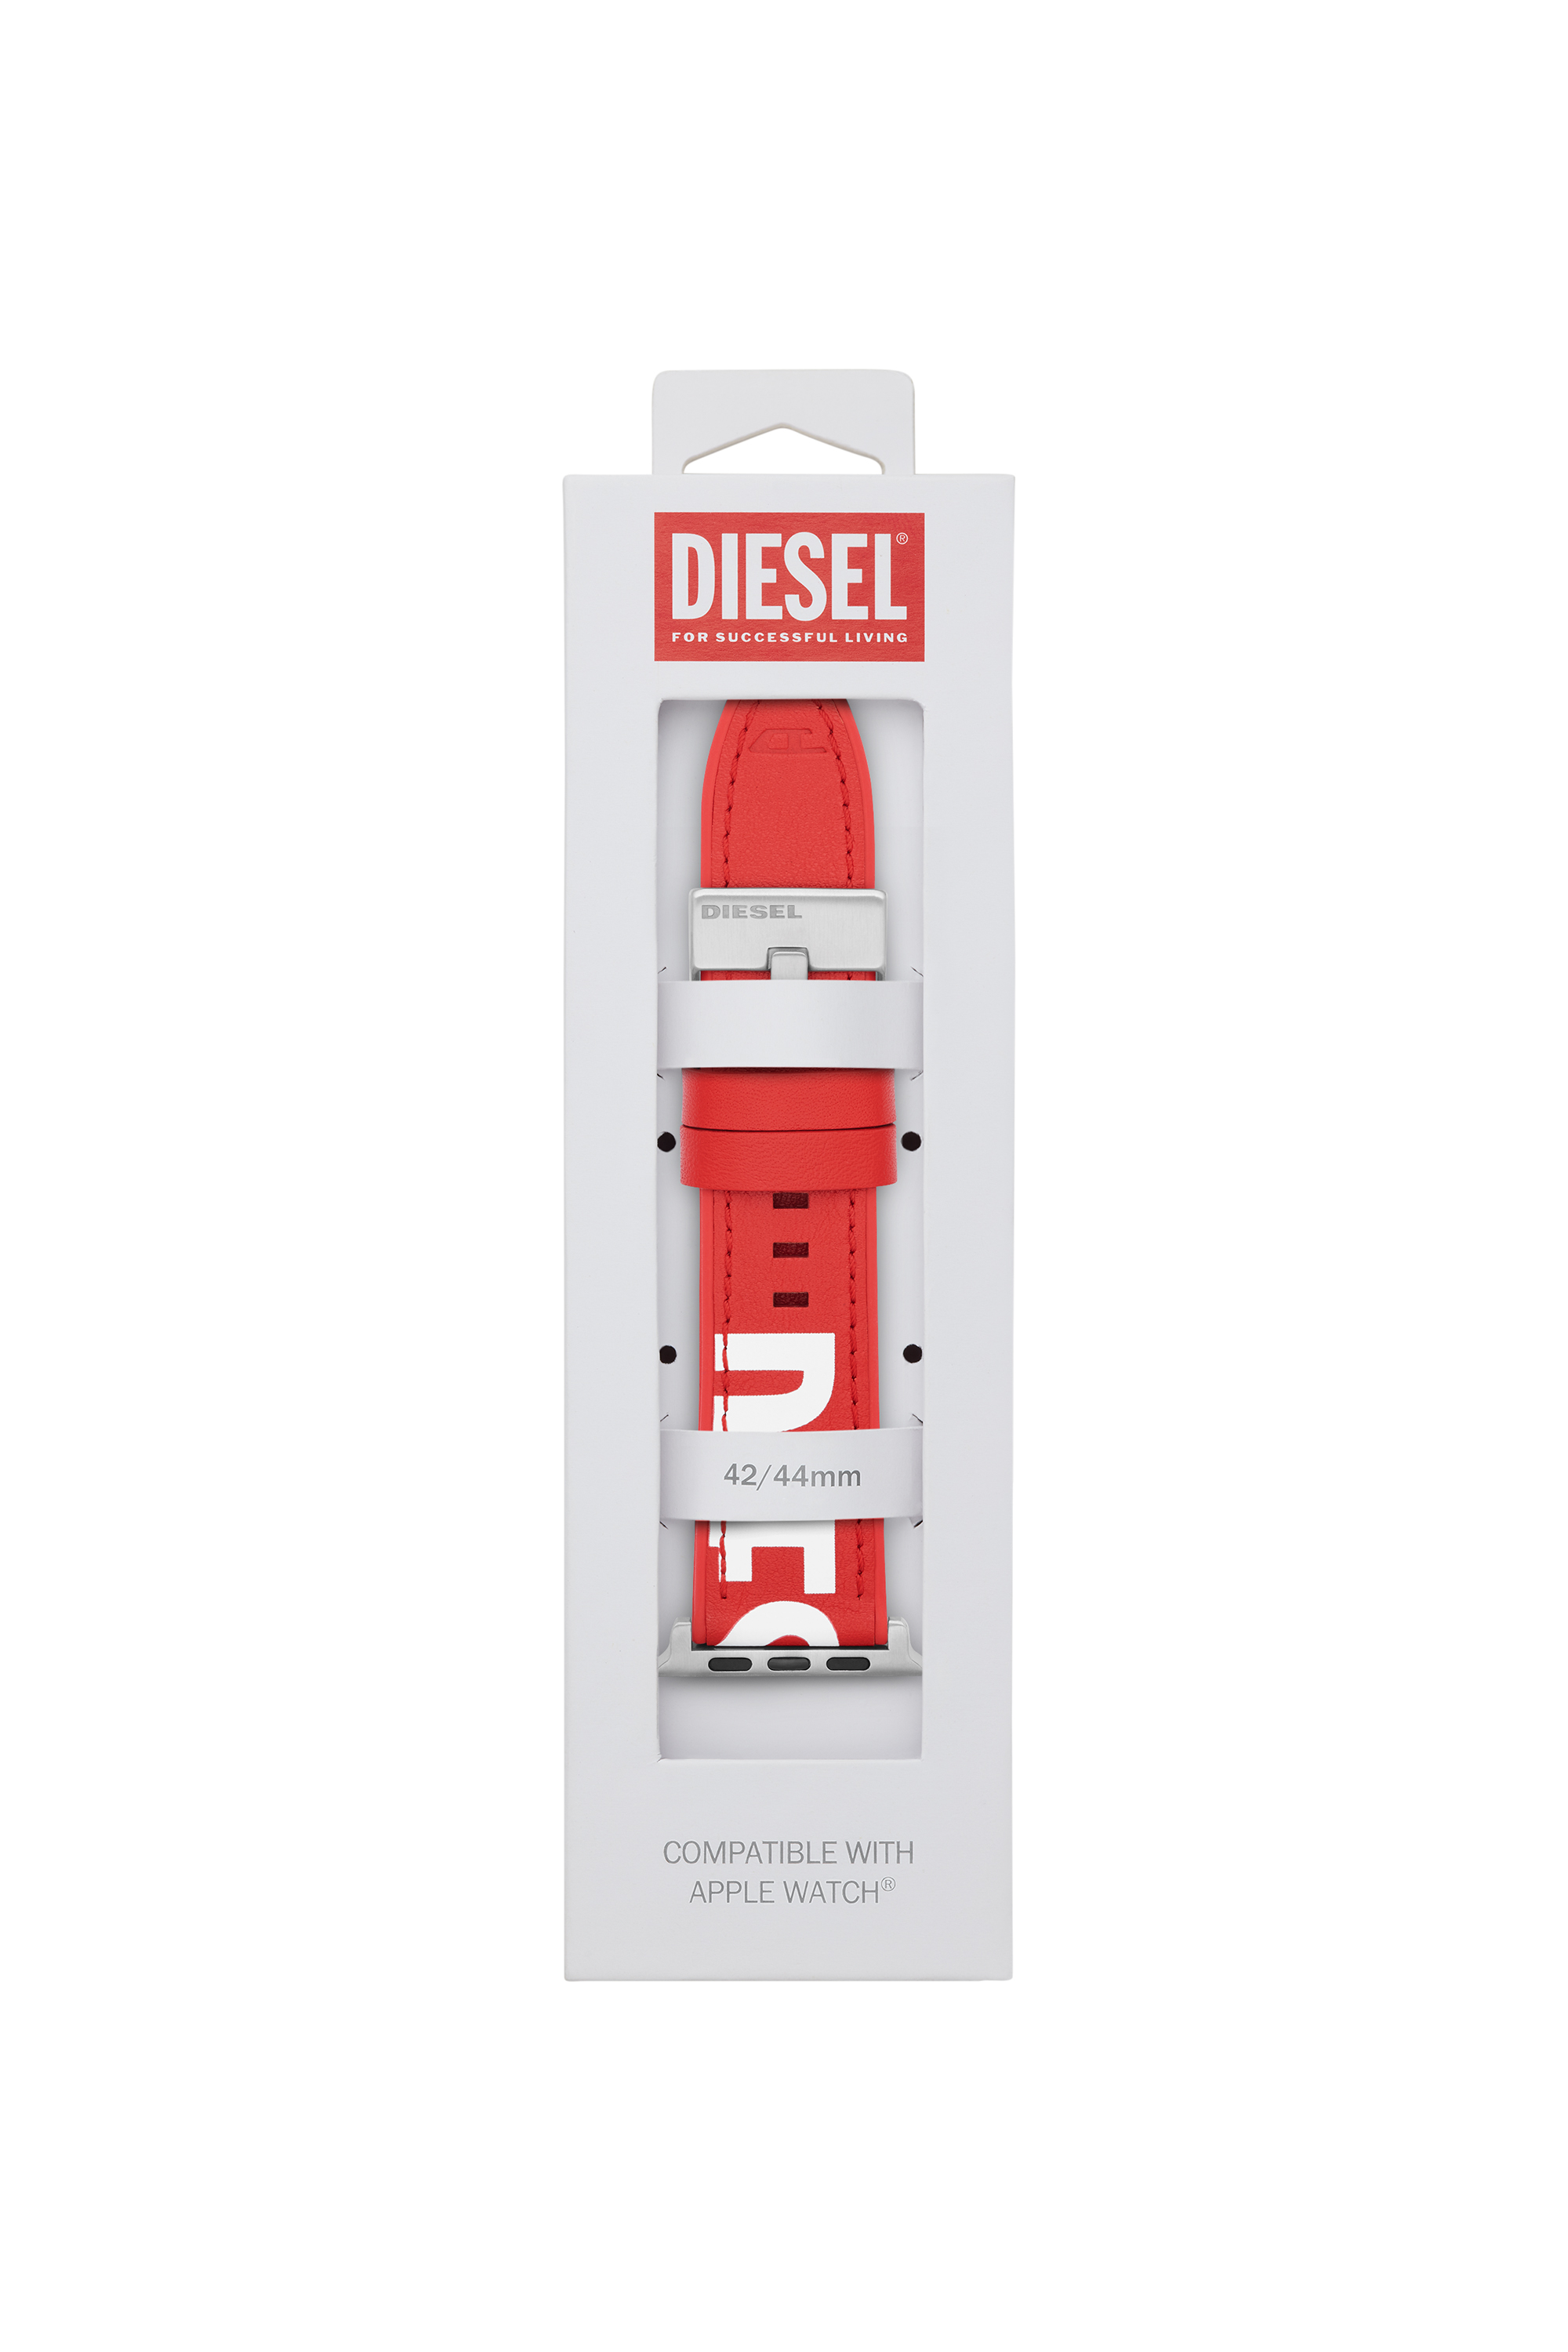 Diesel - DSS003, Rosso - Image 2